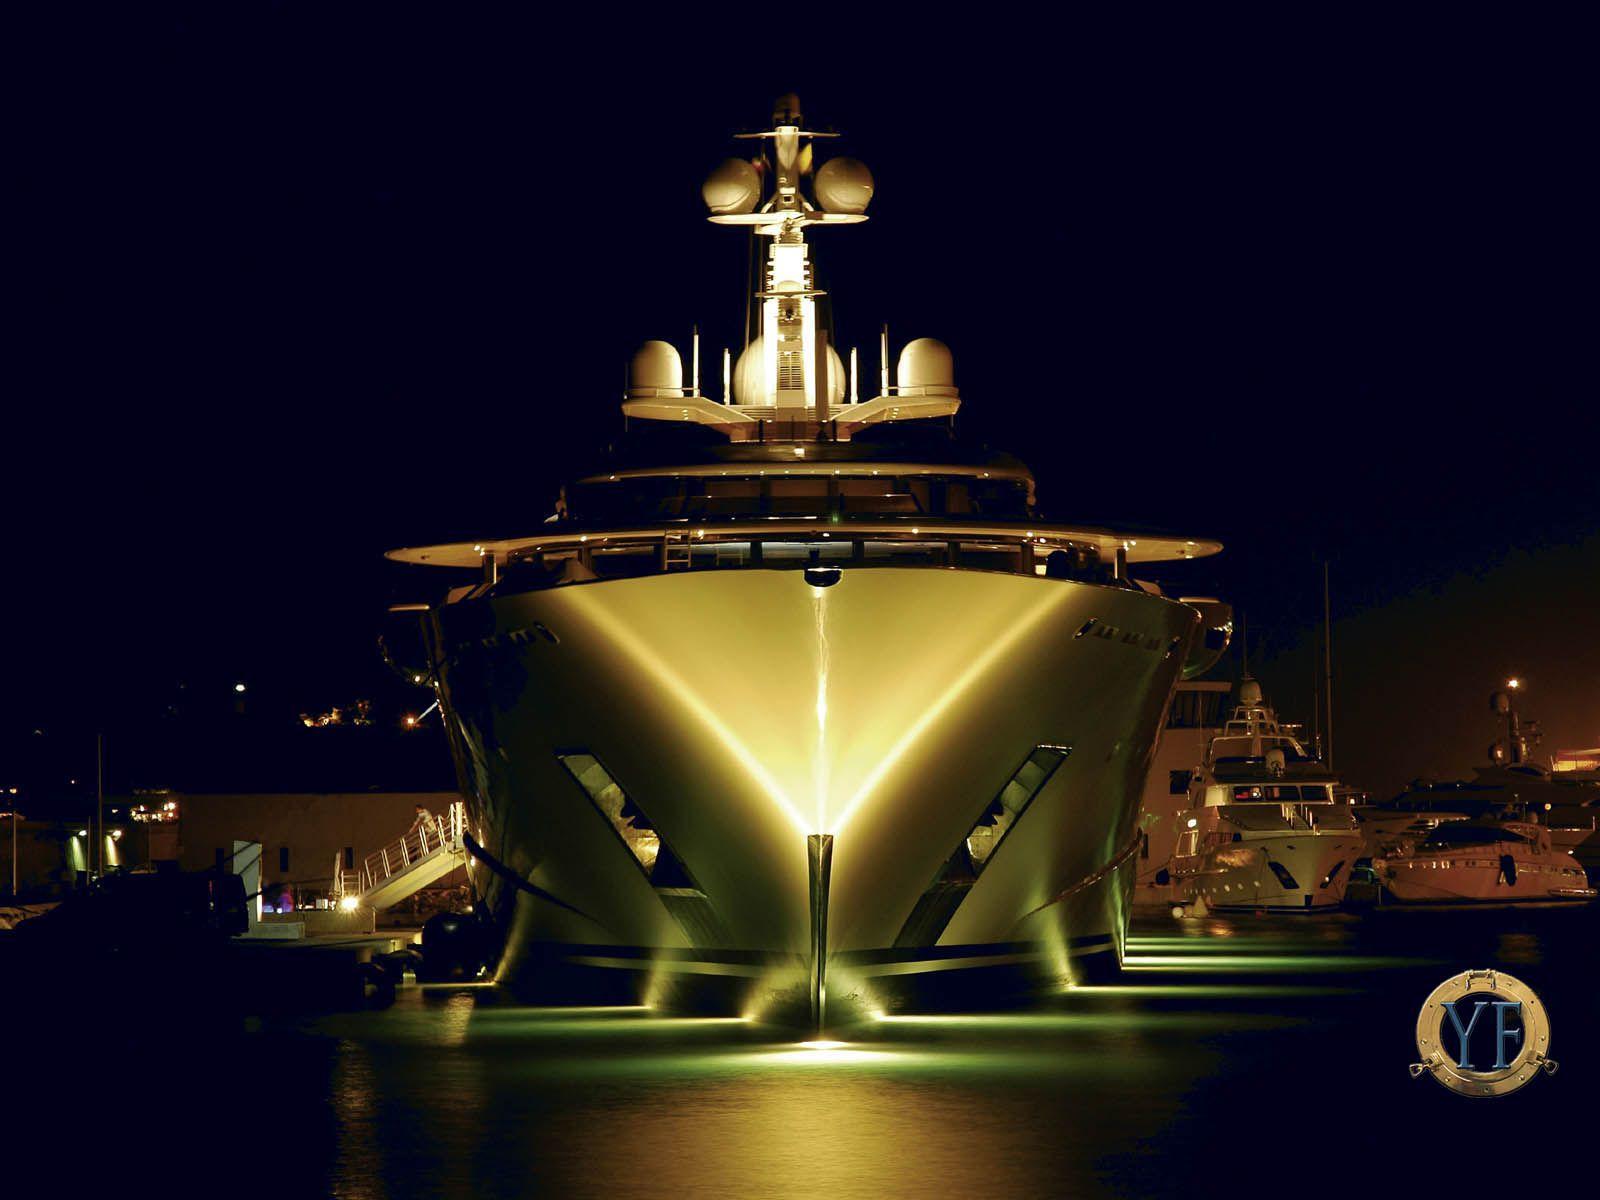 Lurssen Yacht Wallpaper Yacht. YachtForums: We Know Big